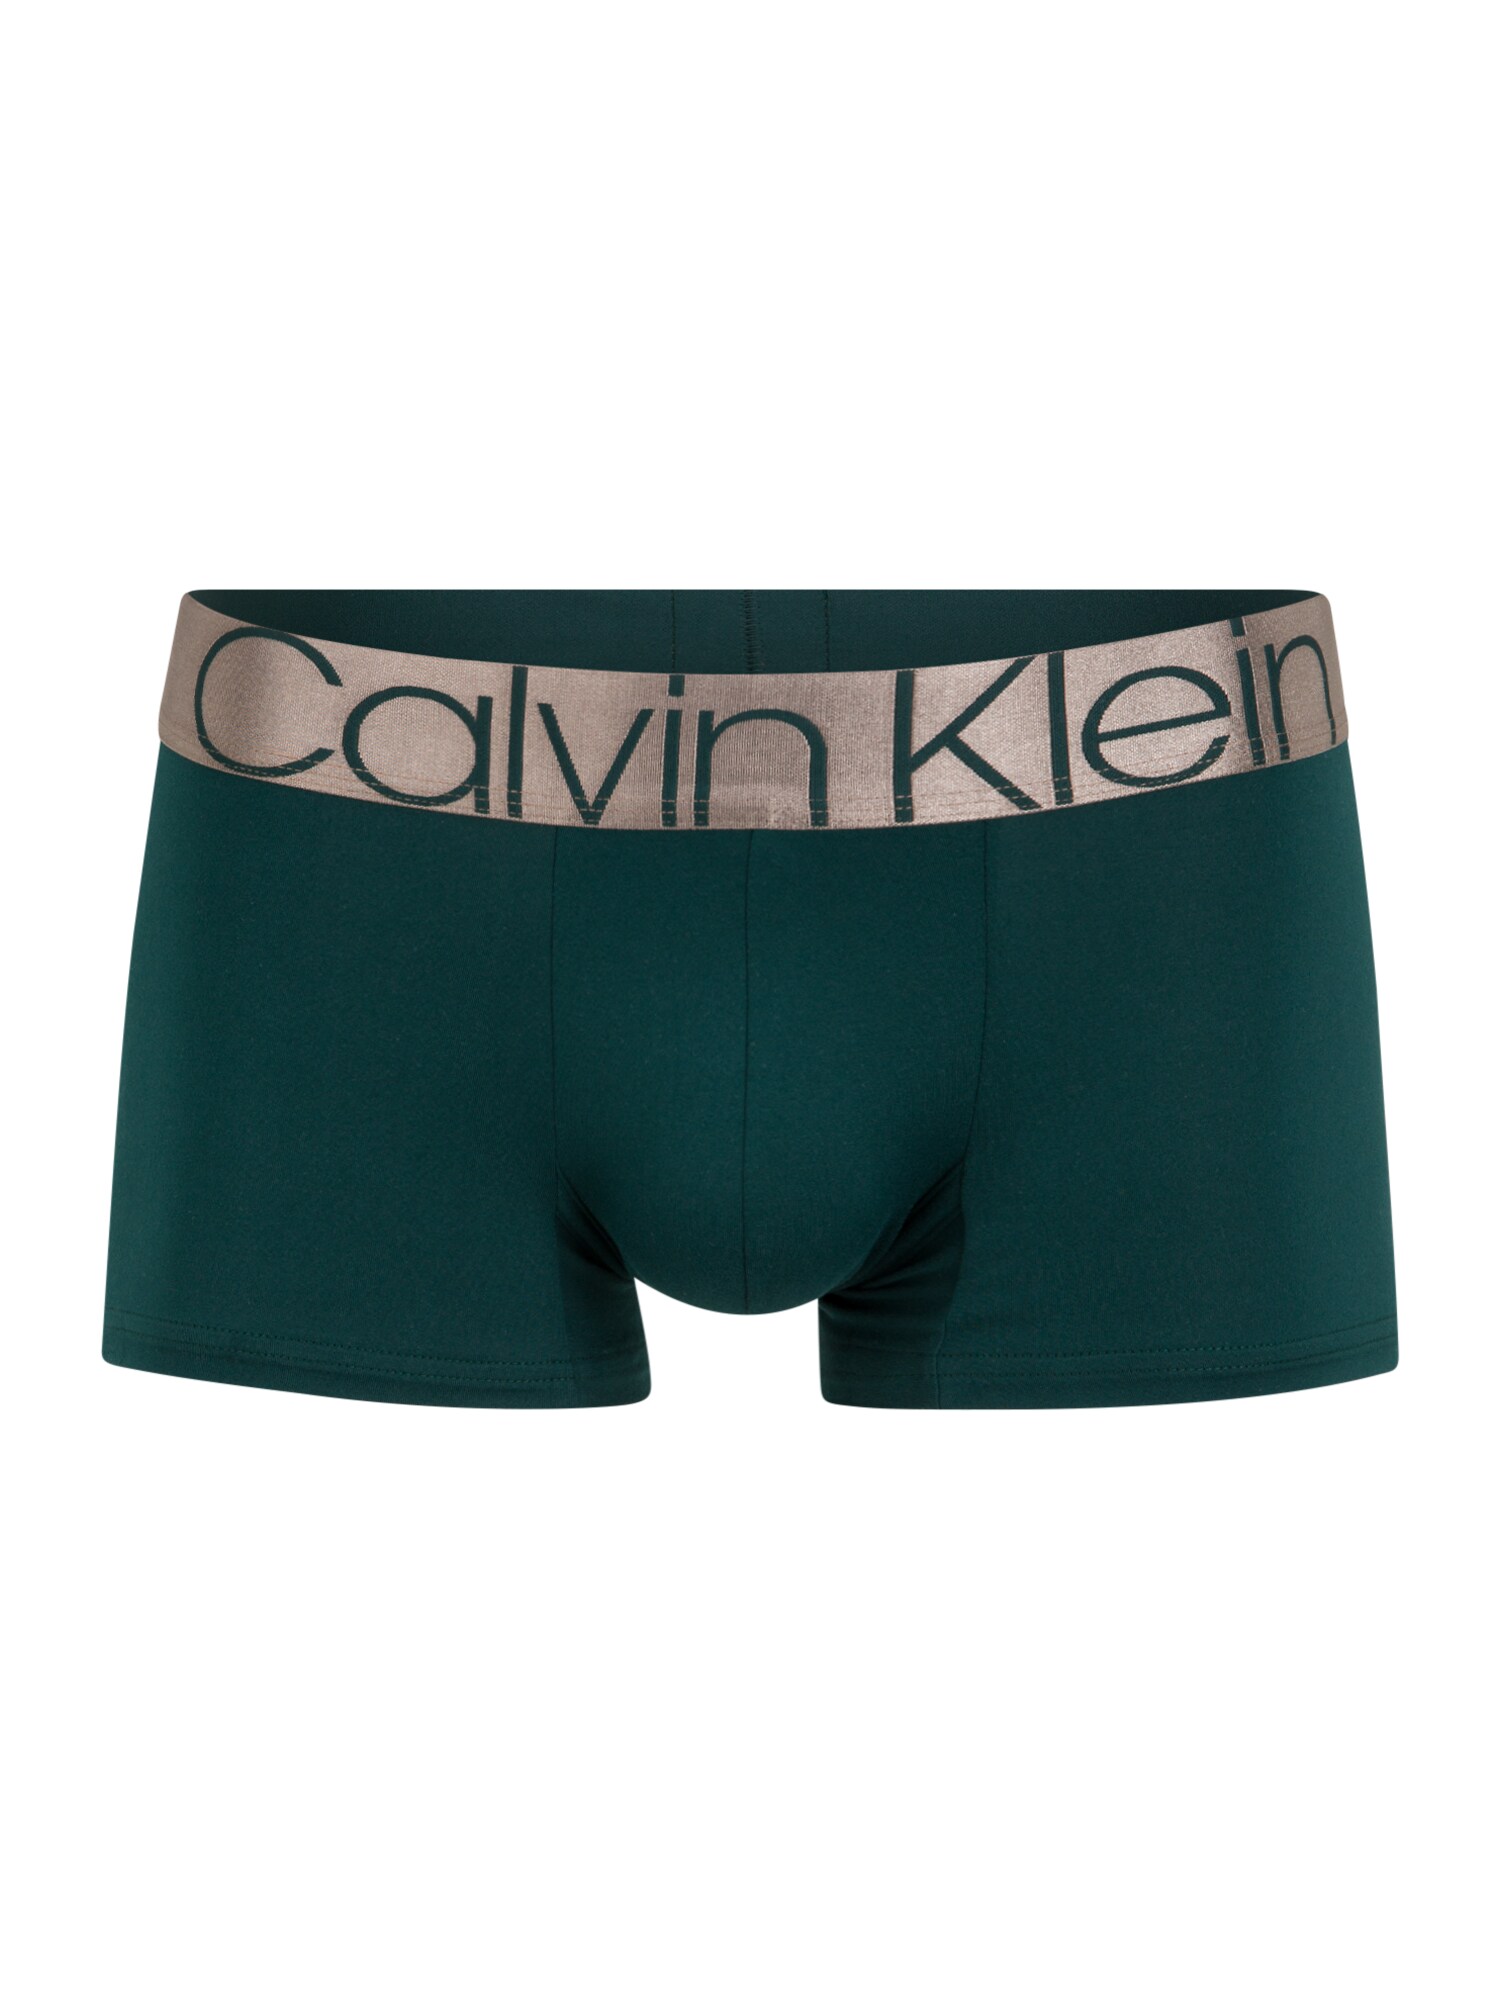 Calvin Klein Underwear Boxer trumpikės  tamsiai žalia / pilka